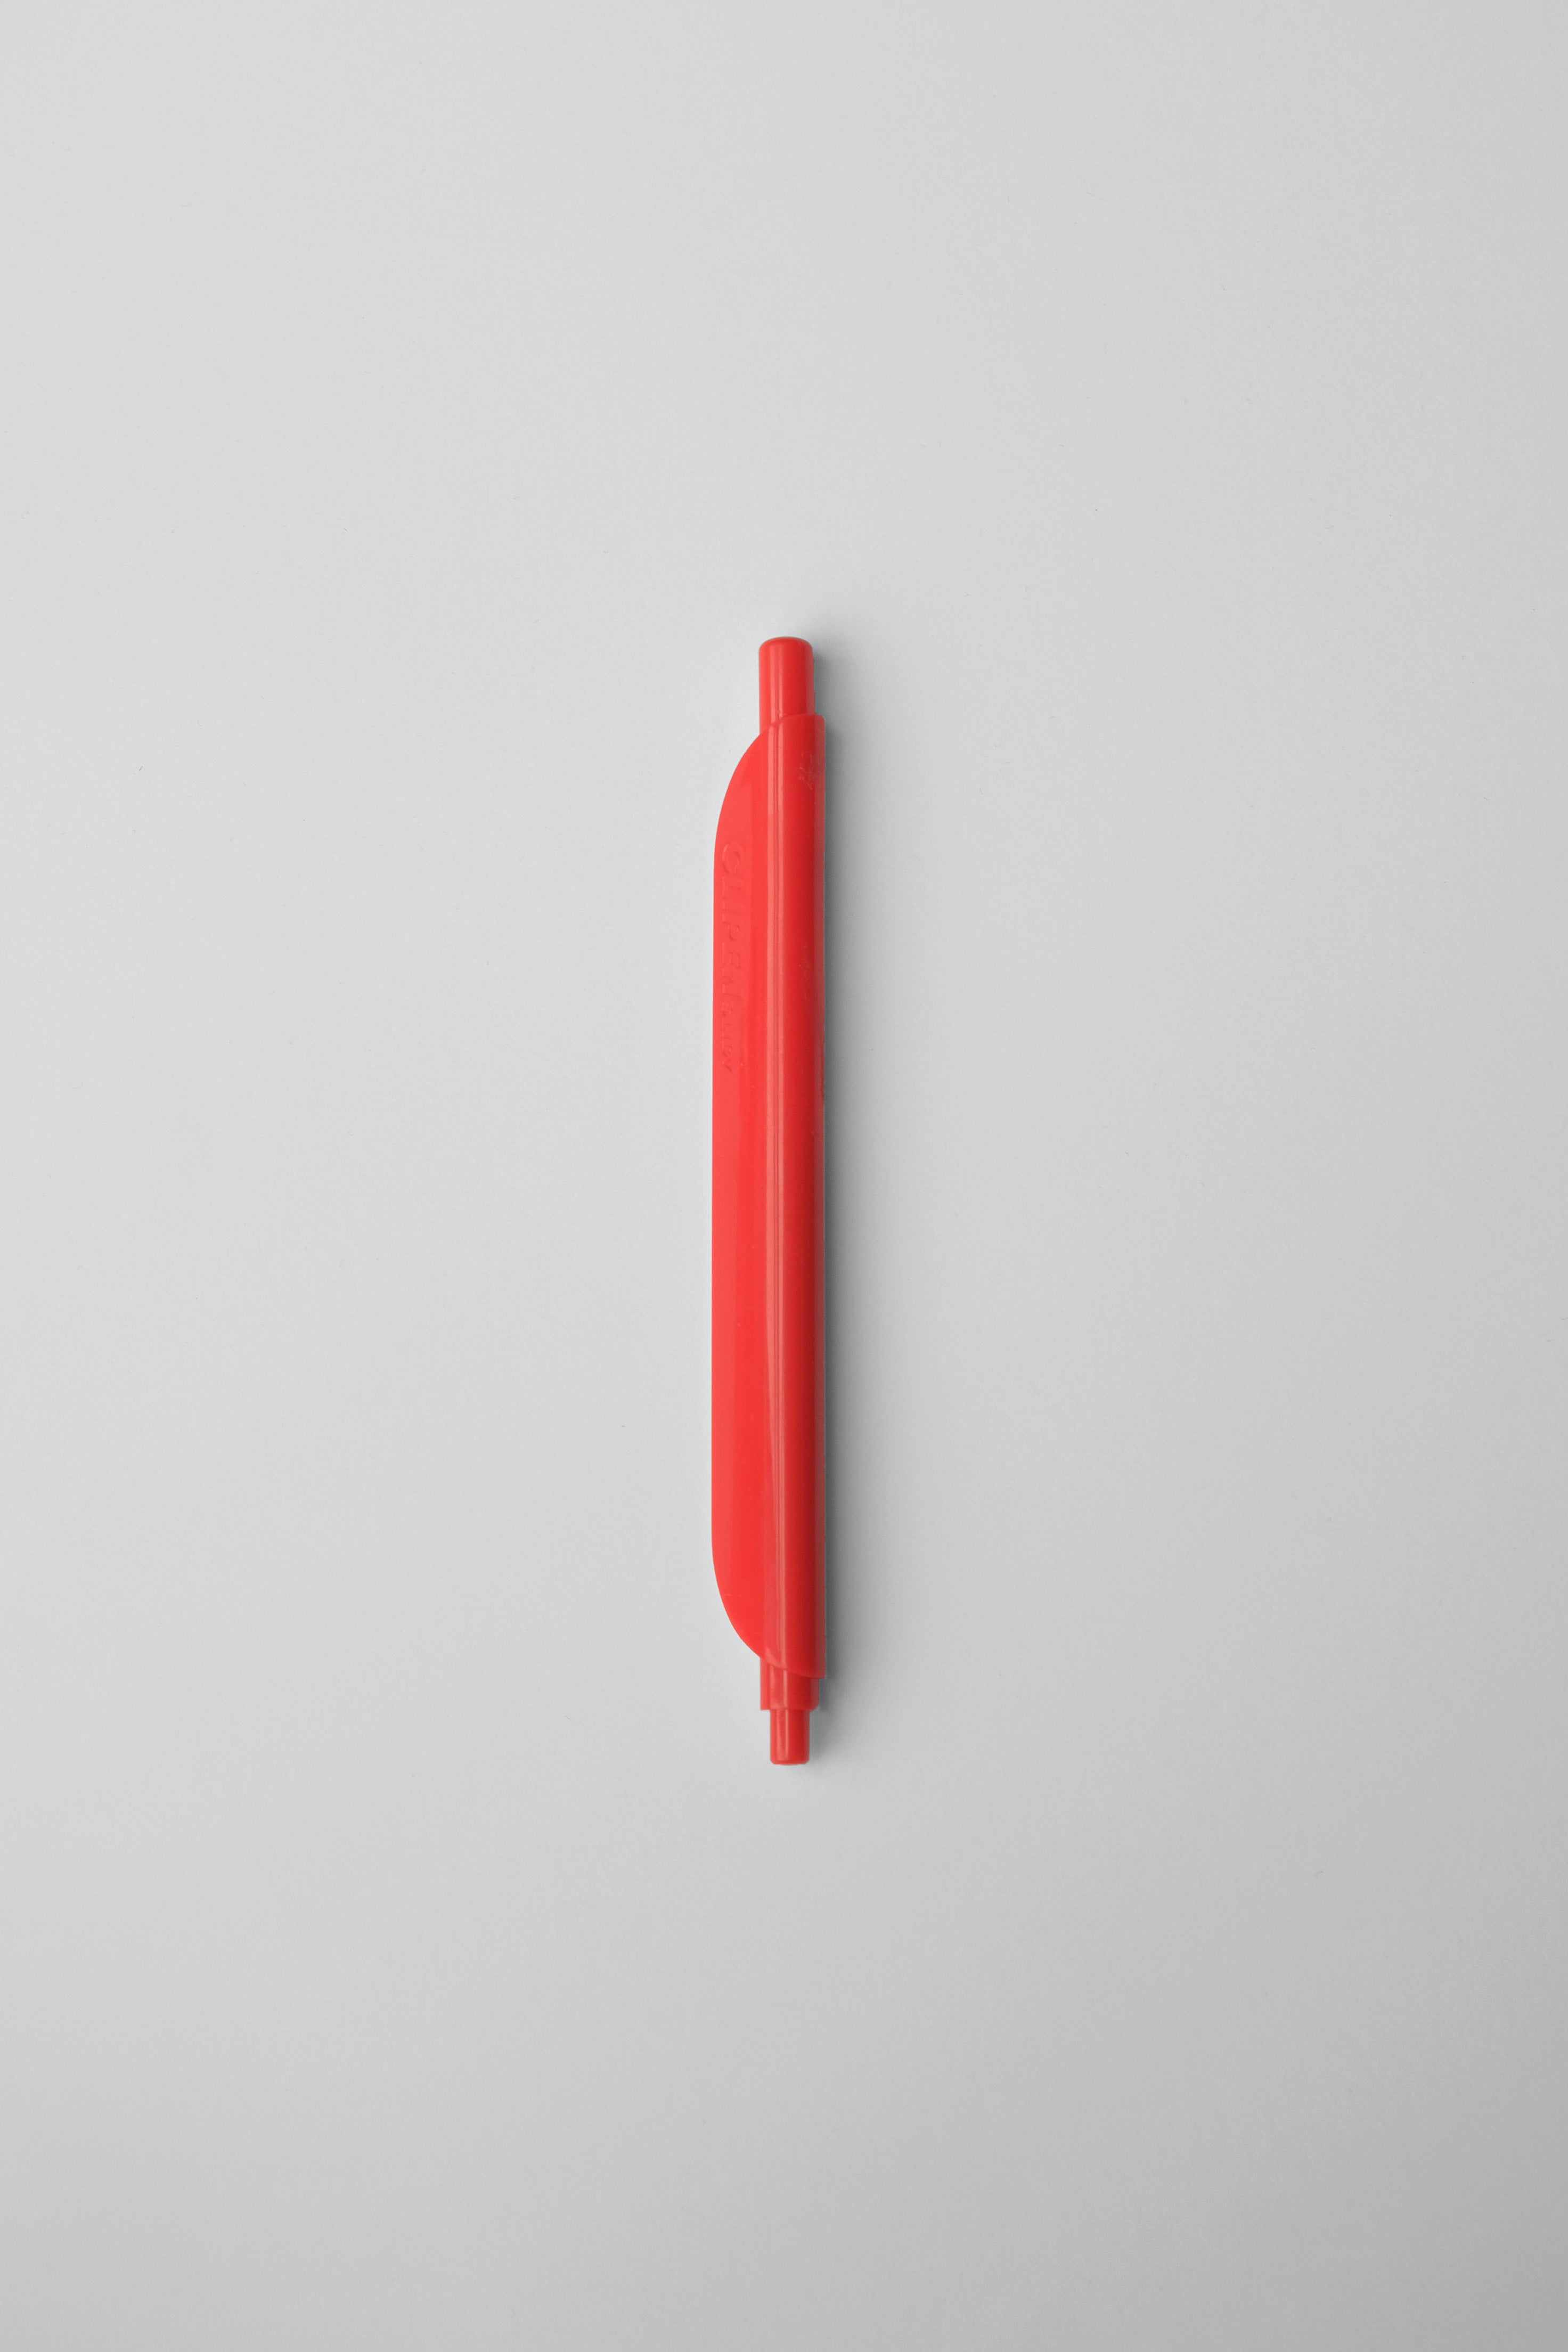 Clipen red-Clipen-[interior]-[design]-KIOSK48TH